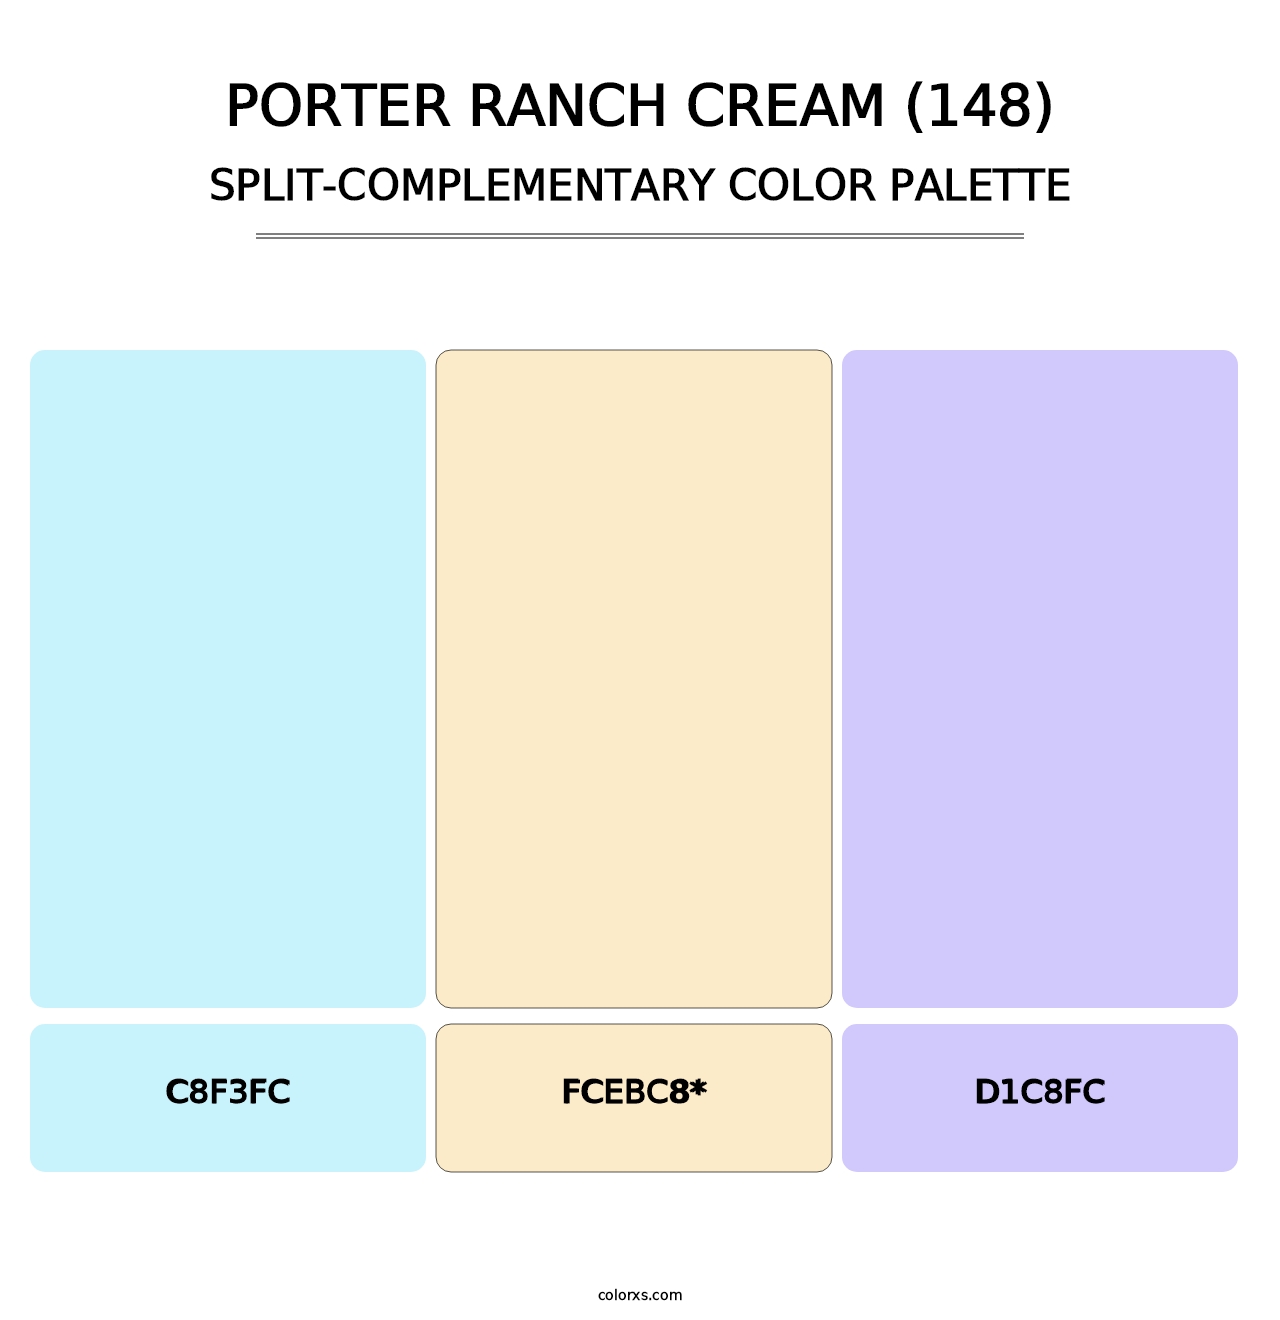 Porter Ranch Cream (148) - Split-Complementary Color Palette